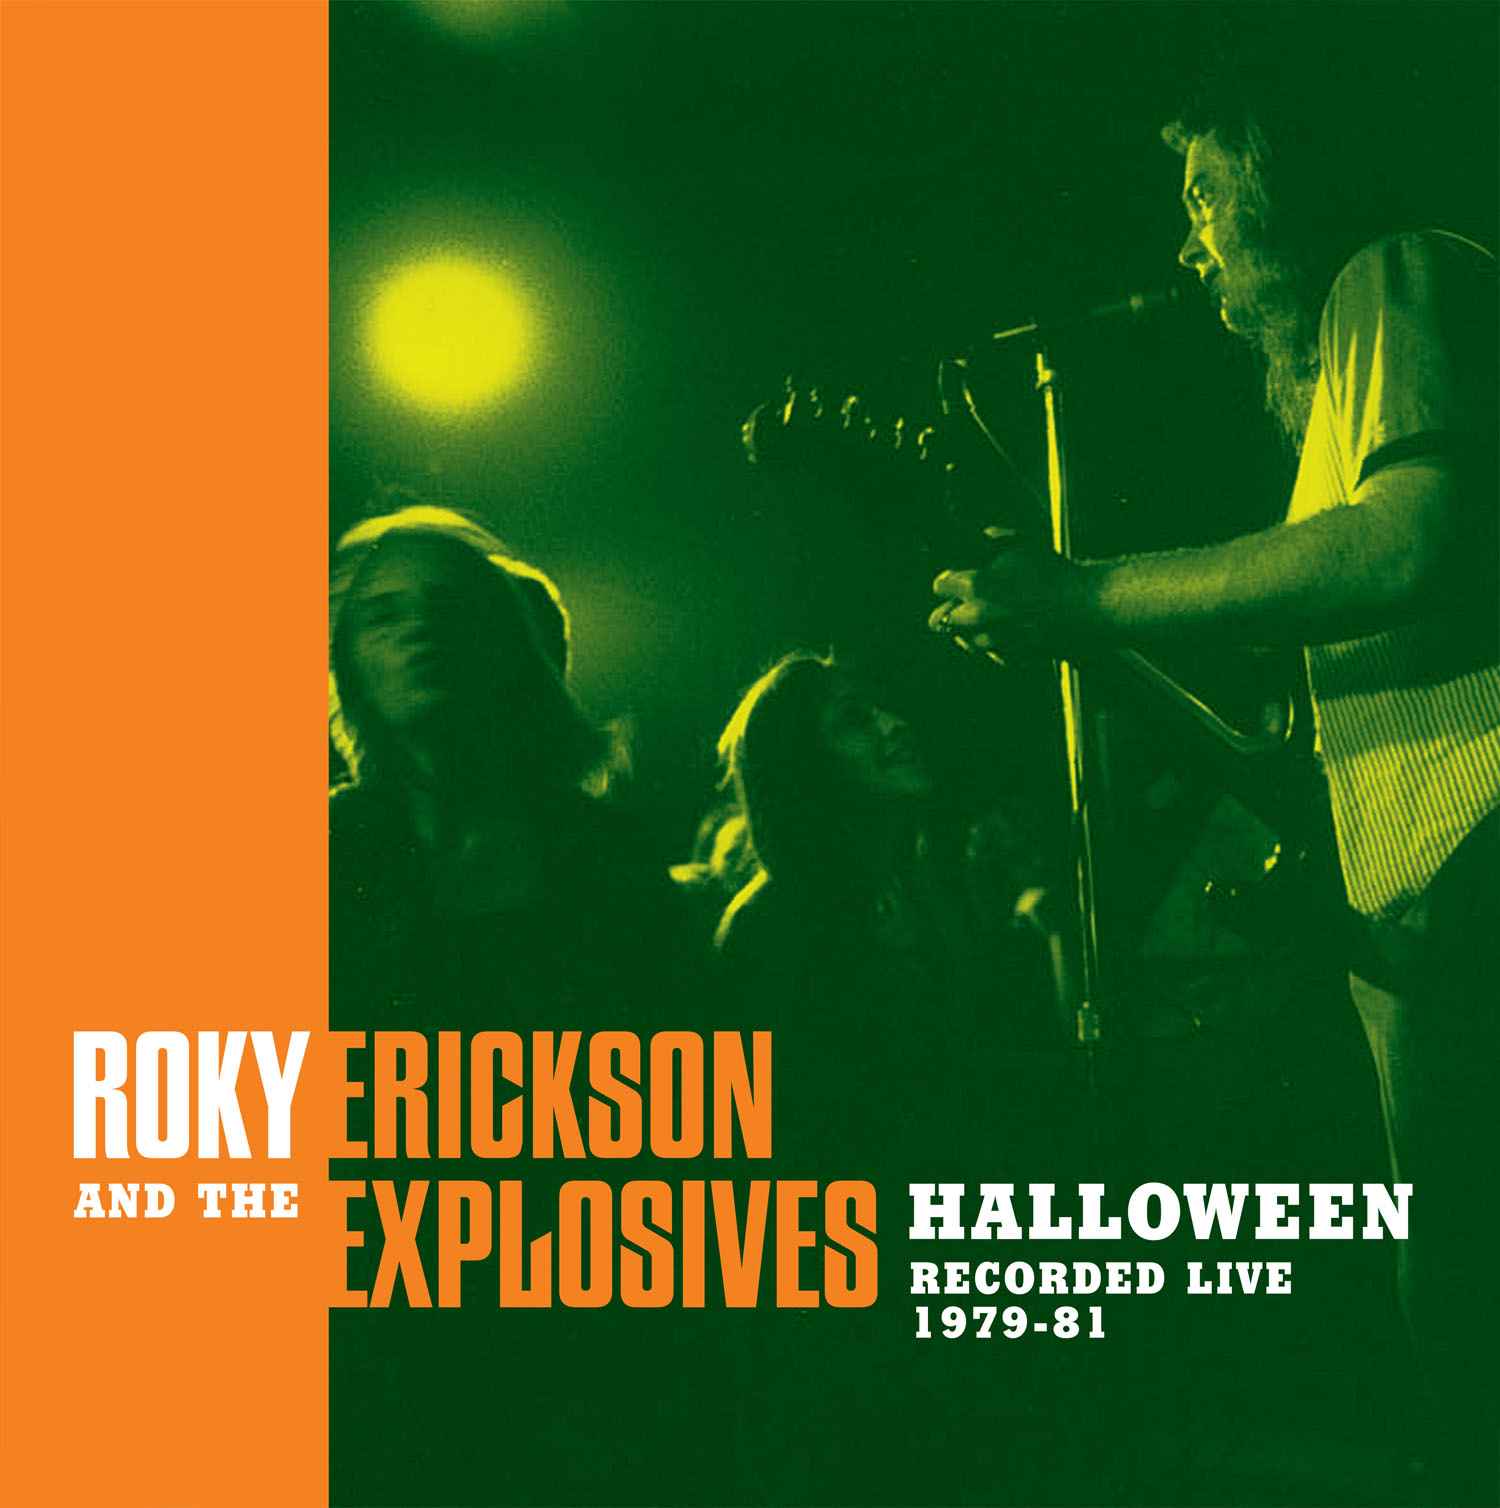 Roky Erickson and the Explosives - Halloween LP cover